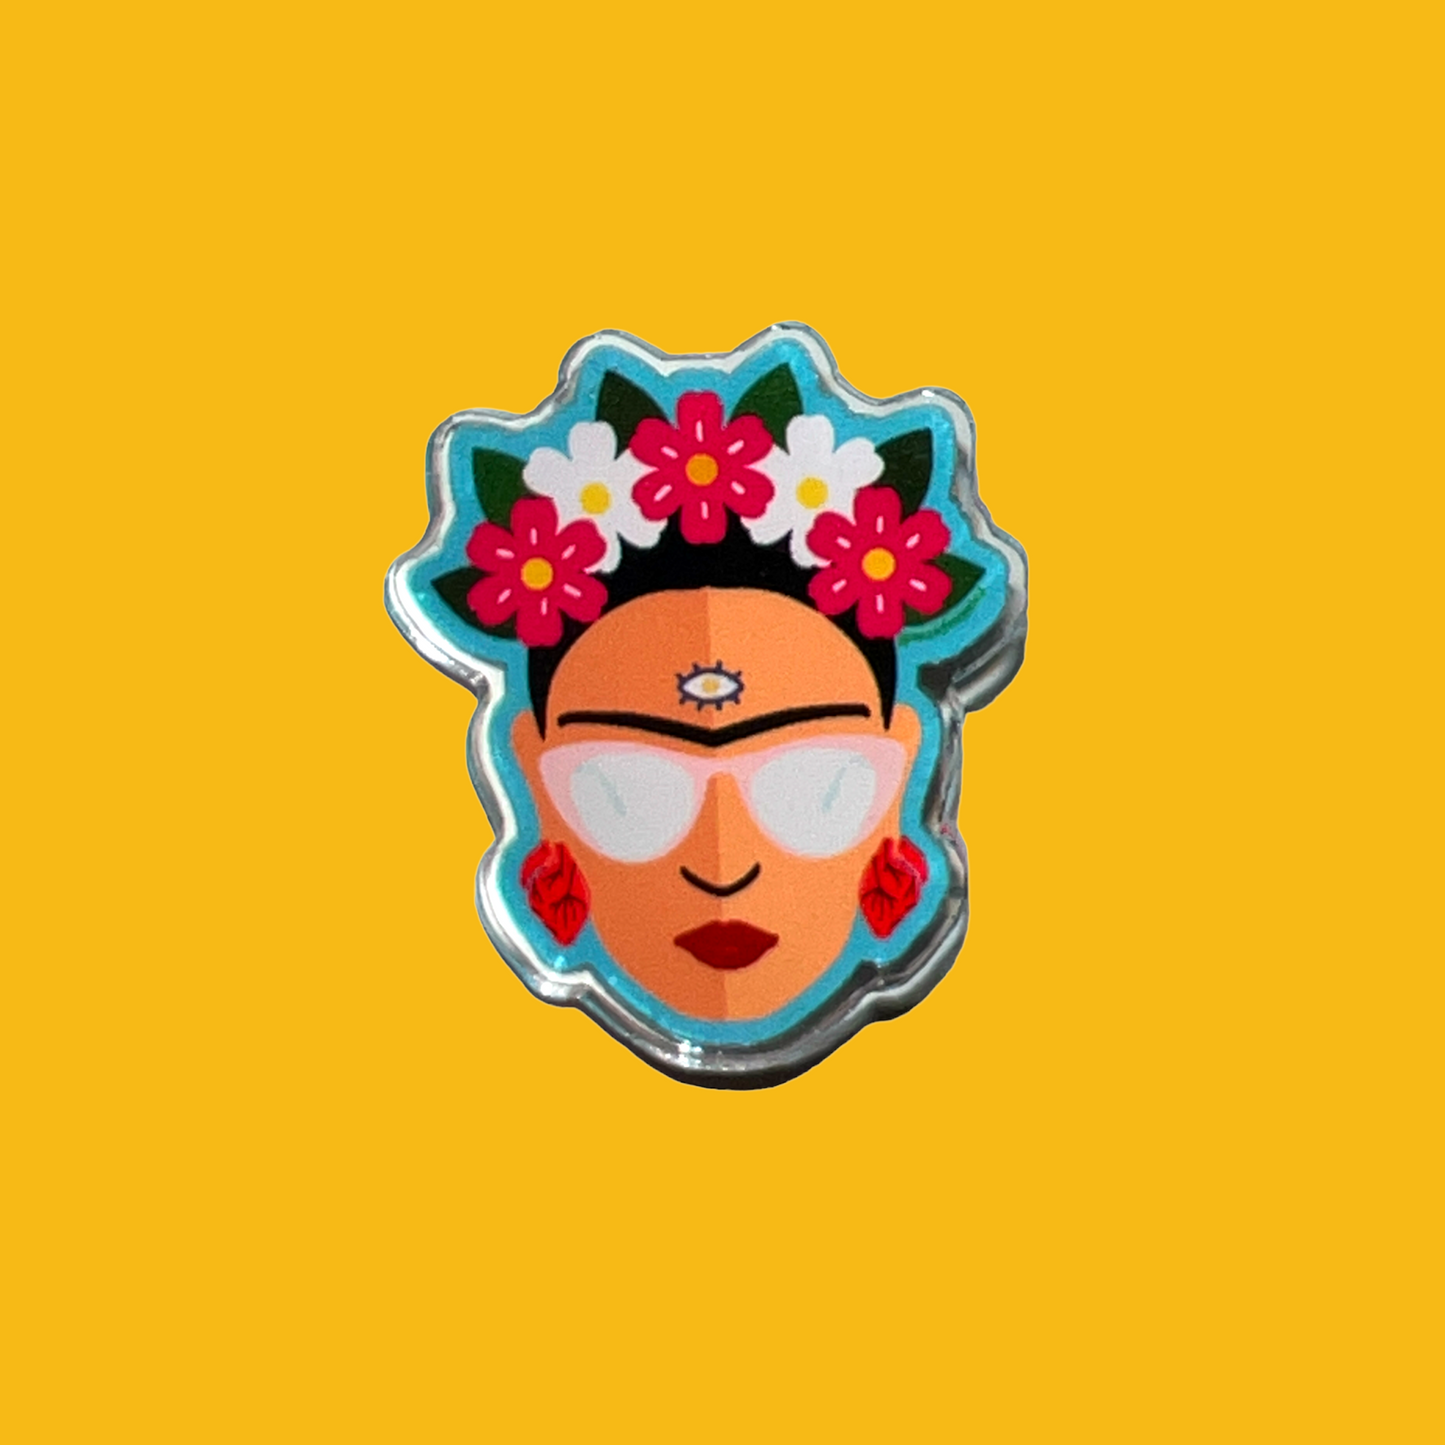 Frida Kahlo Portrait Pin